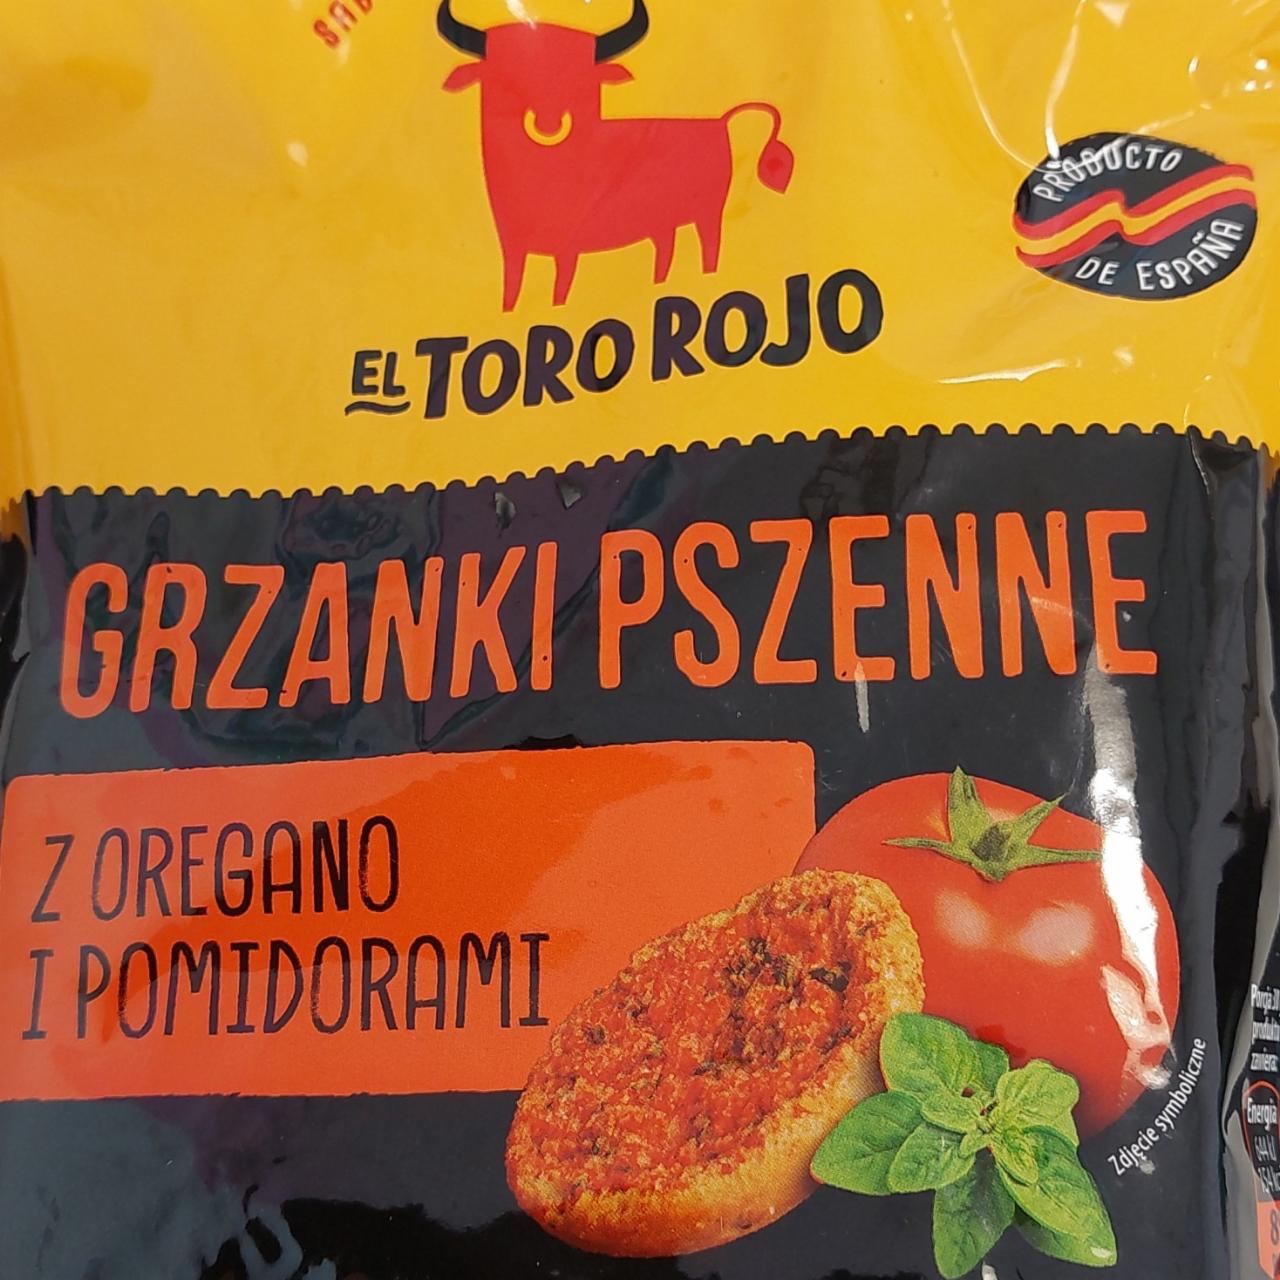 Fotografie - Grzanki pszenne z oregano i pomidorami El Toro Rojo